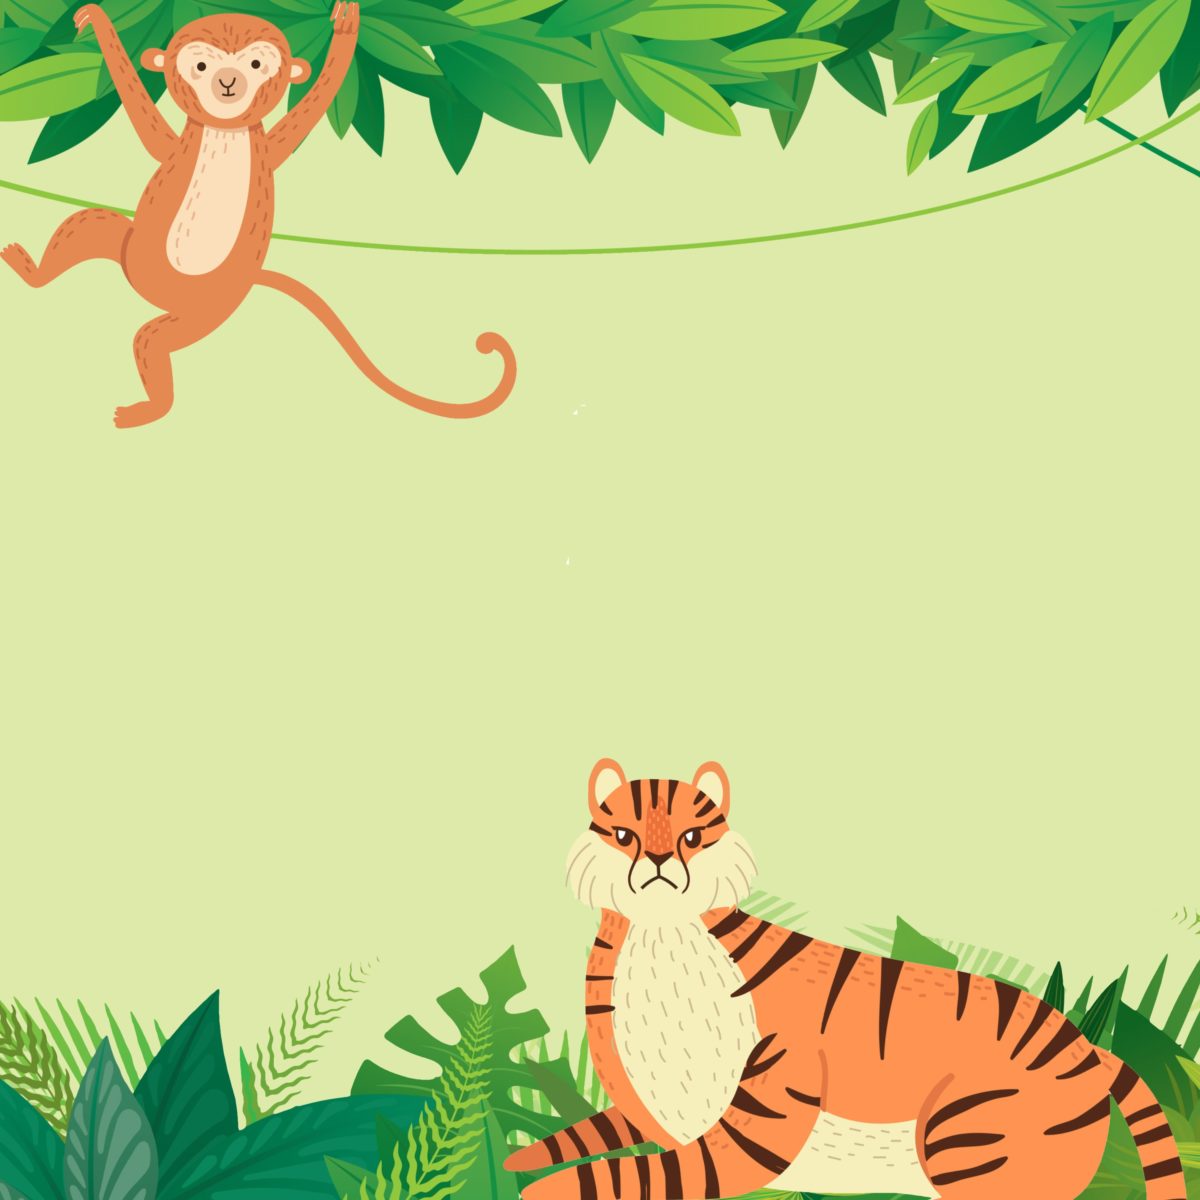 How the Monkey Tricked the Tiger - Brazil Audiobooks - Free Audio Books | Knigi-Audio.com/en/